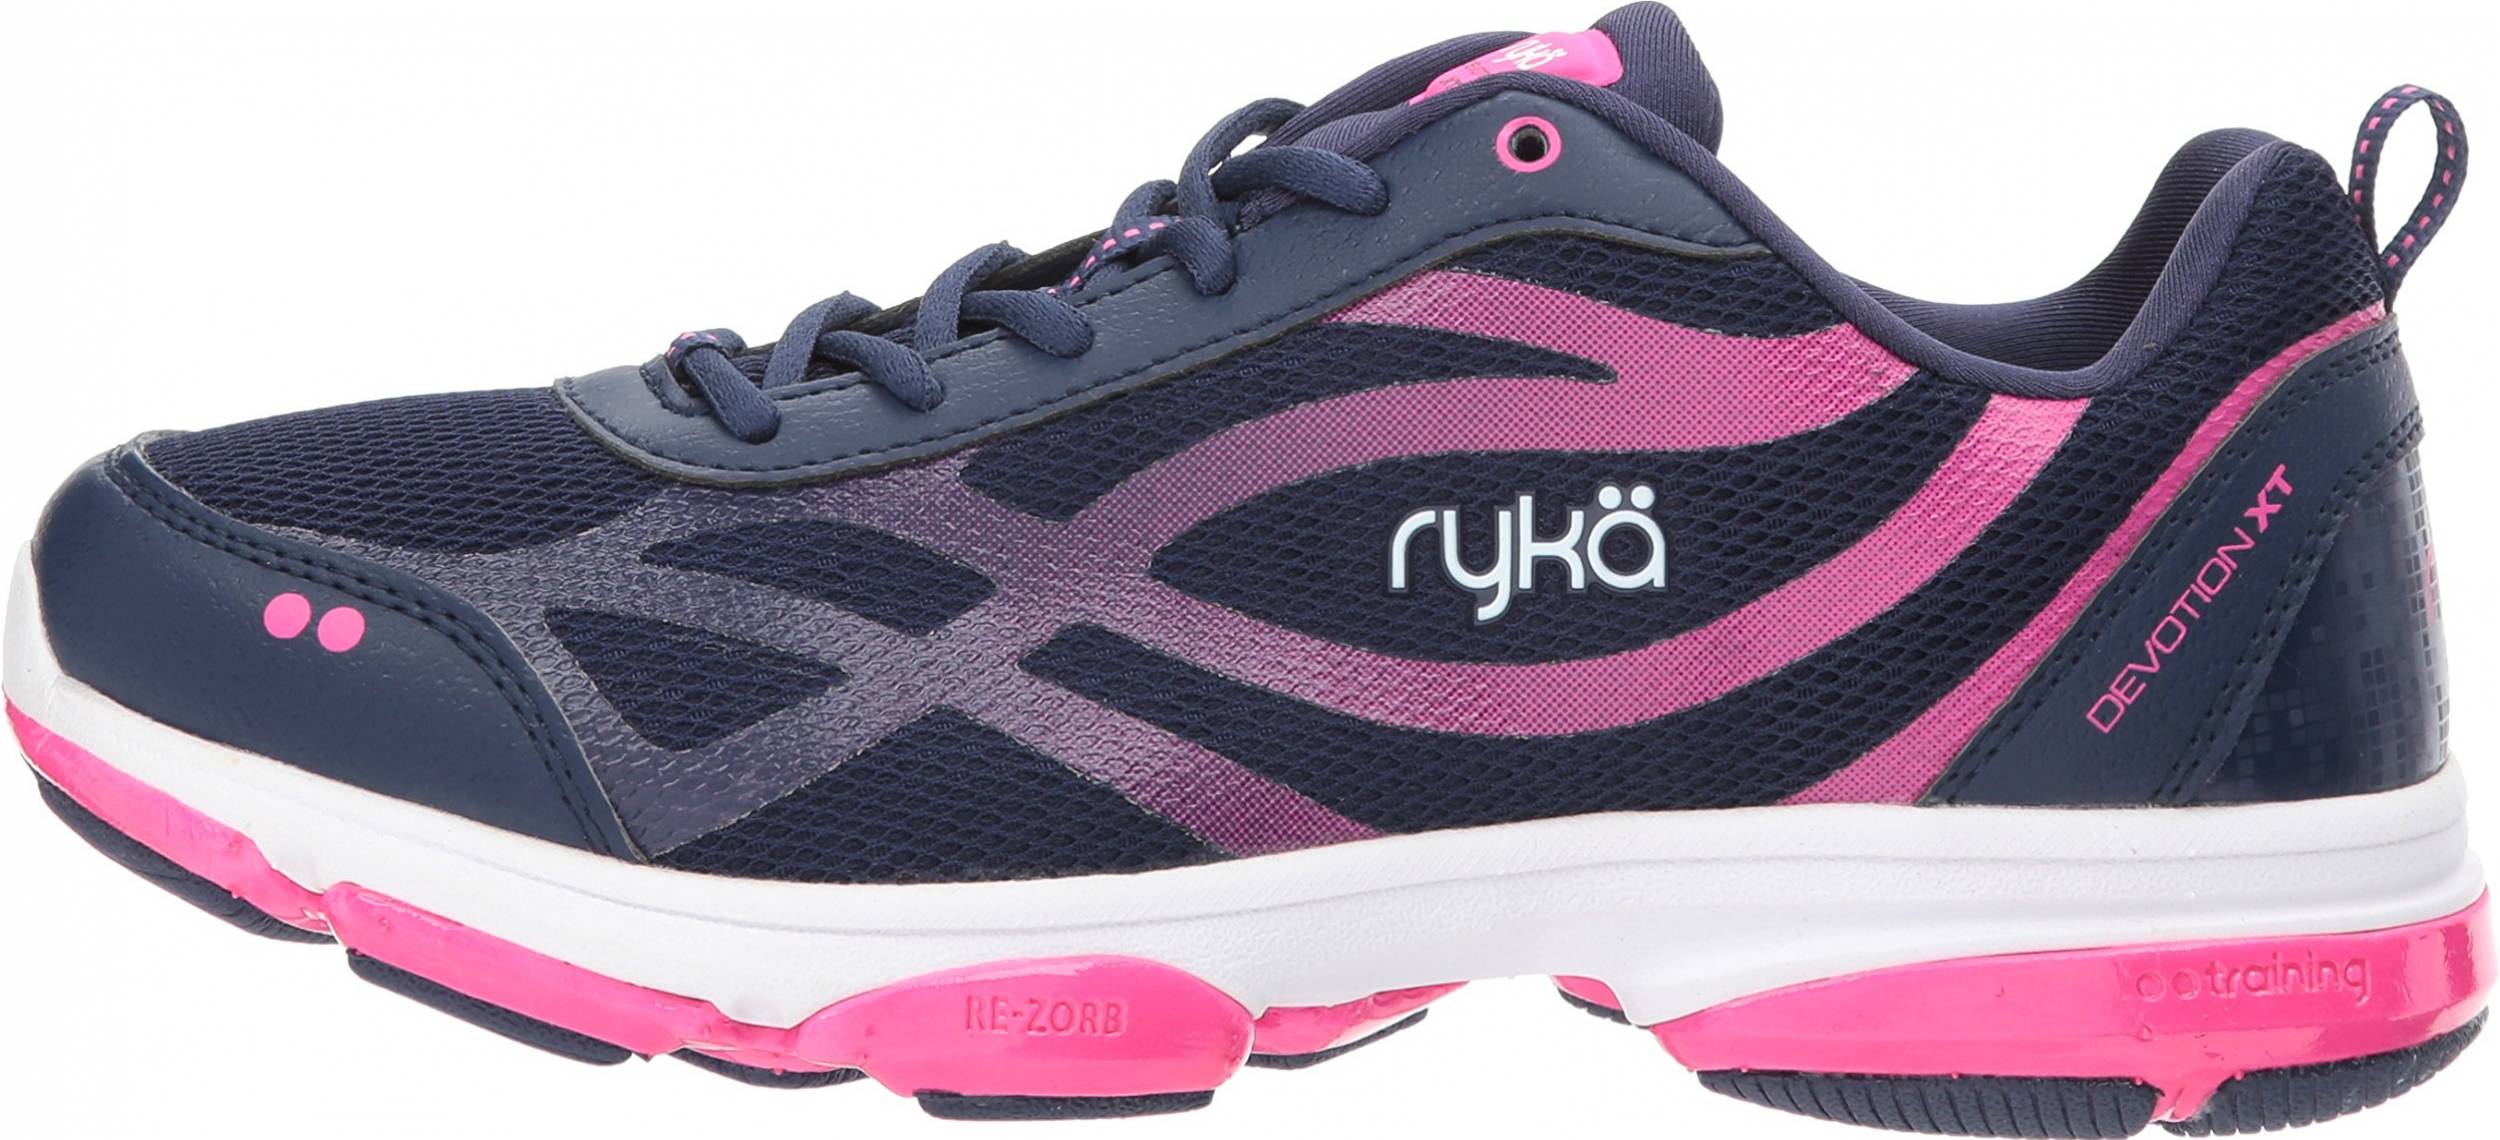 RYKA Womens Devotion XT Training Shoe